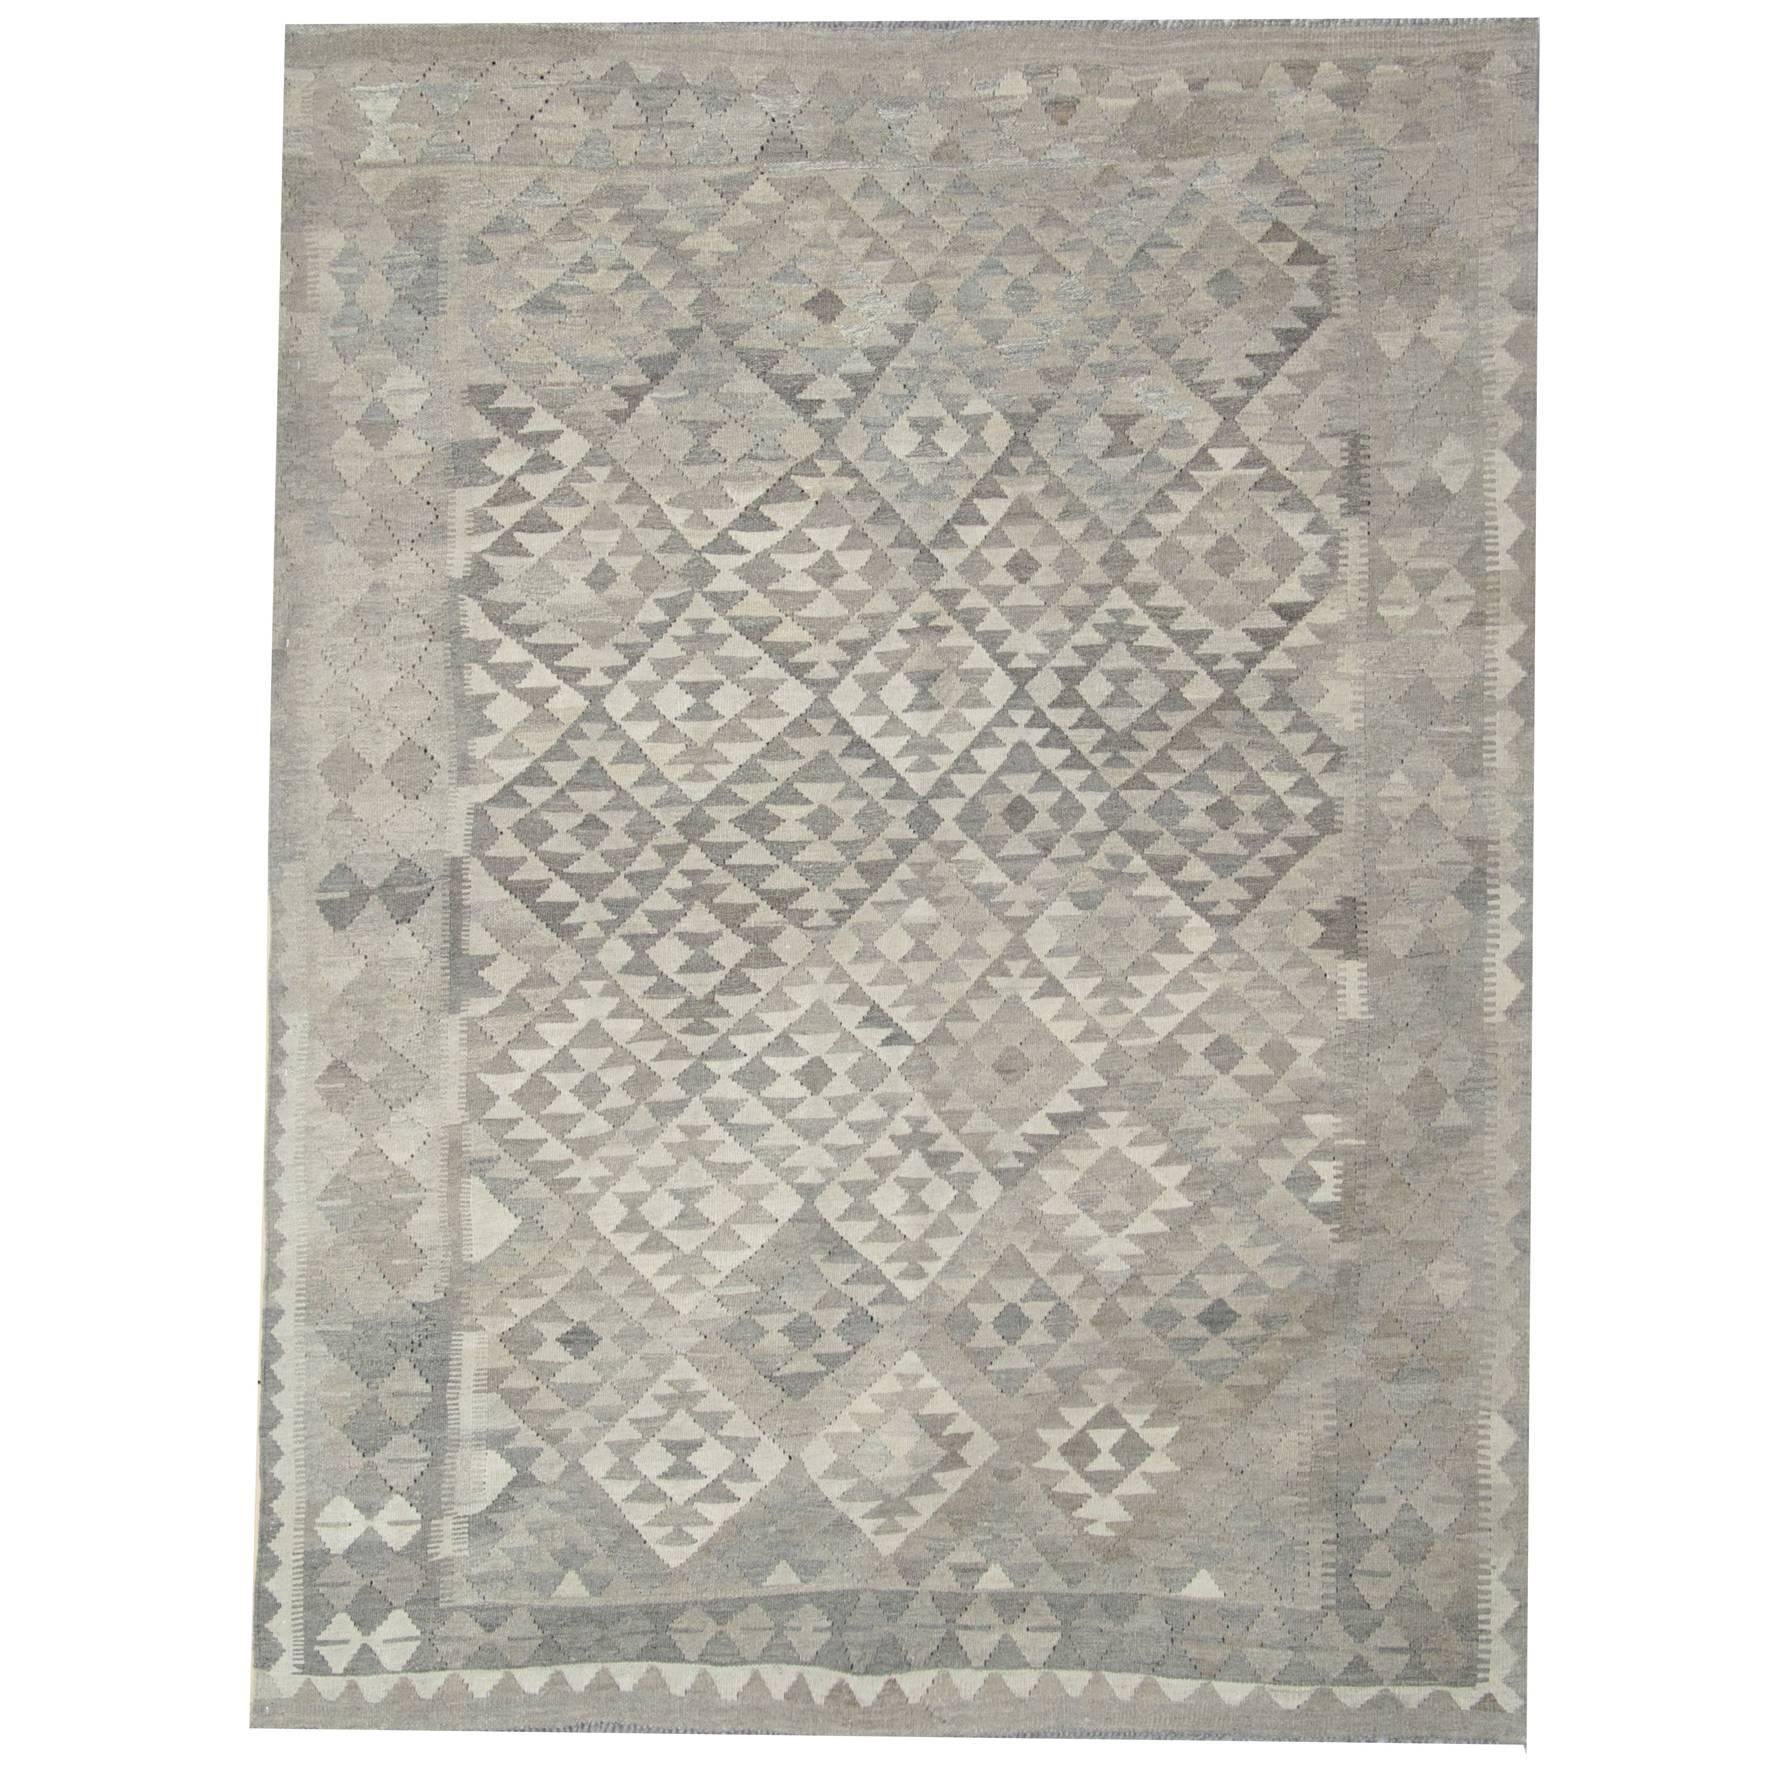 Afghan Kilim Rugs, Grey Rug, Traditional Carpet from Afghanistan 